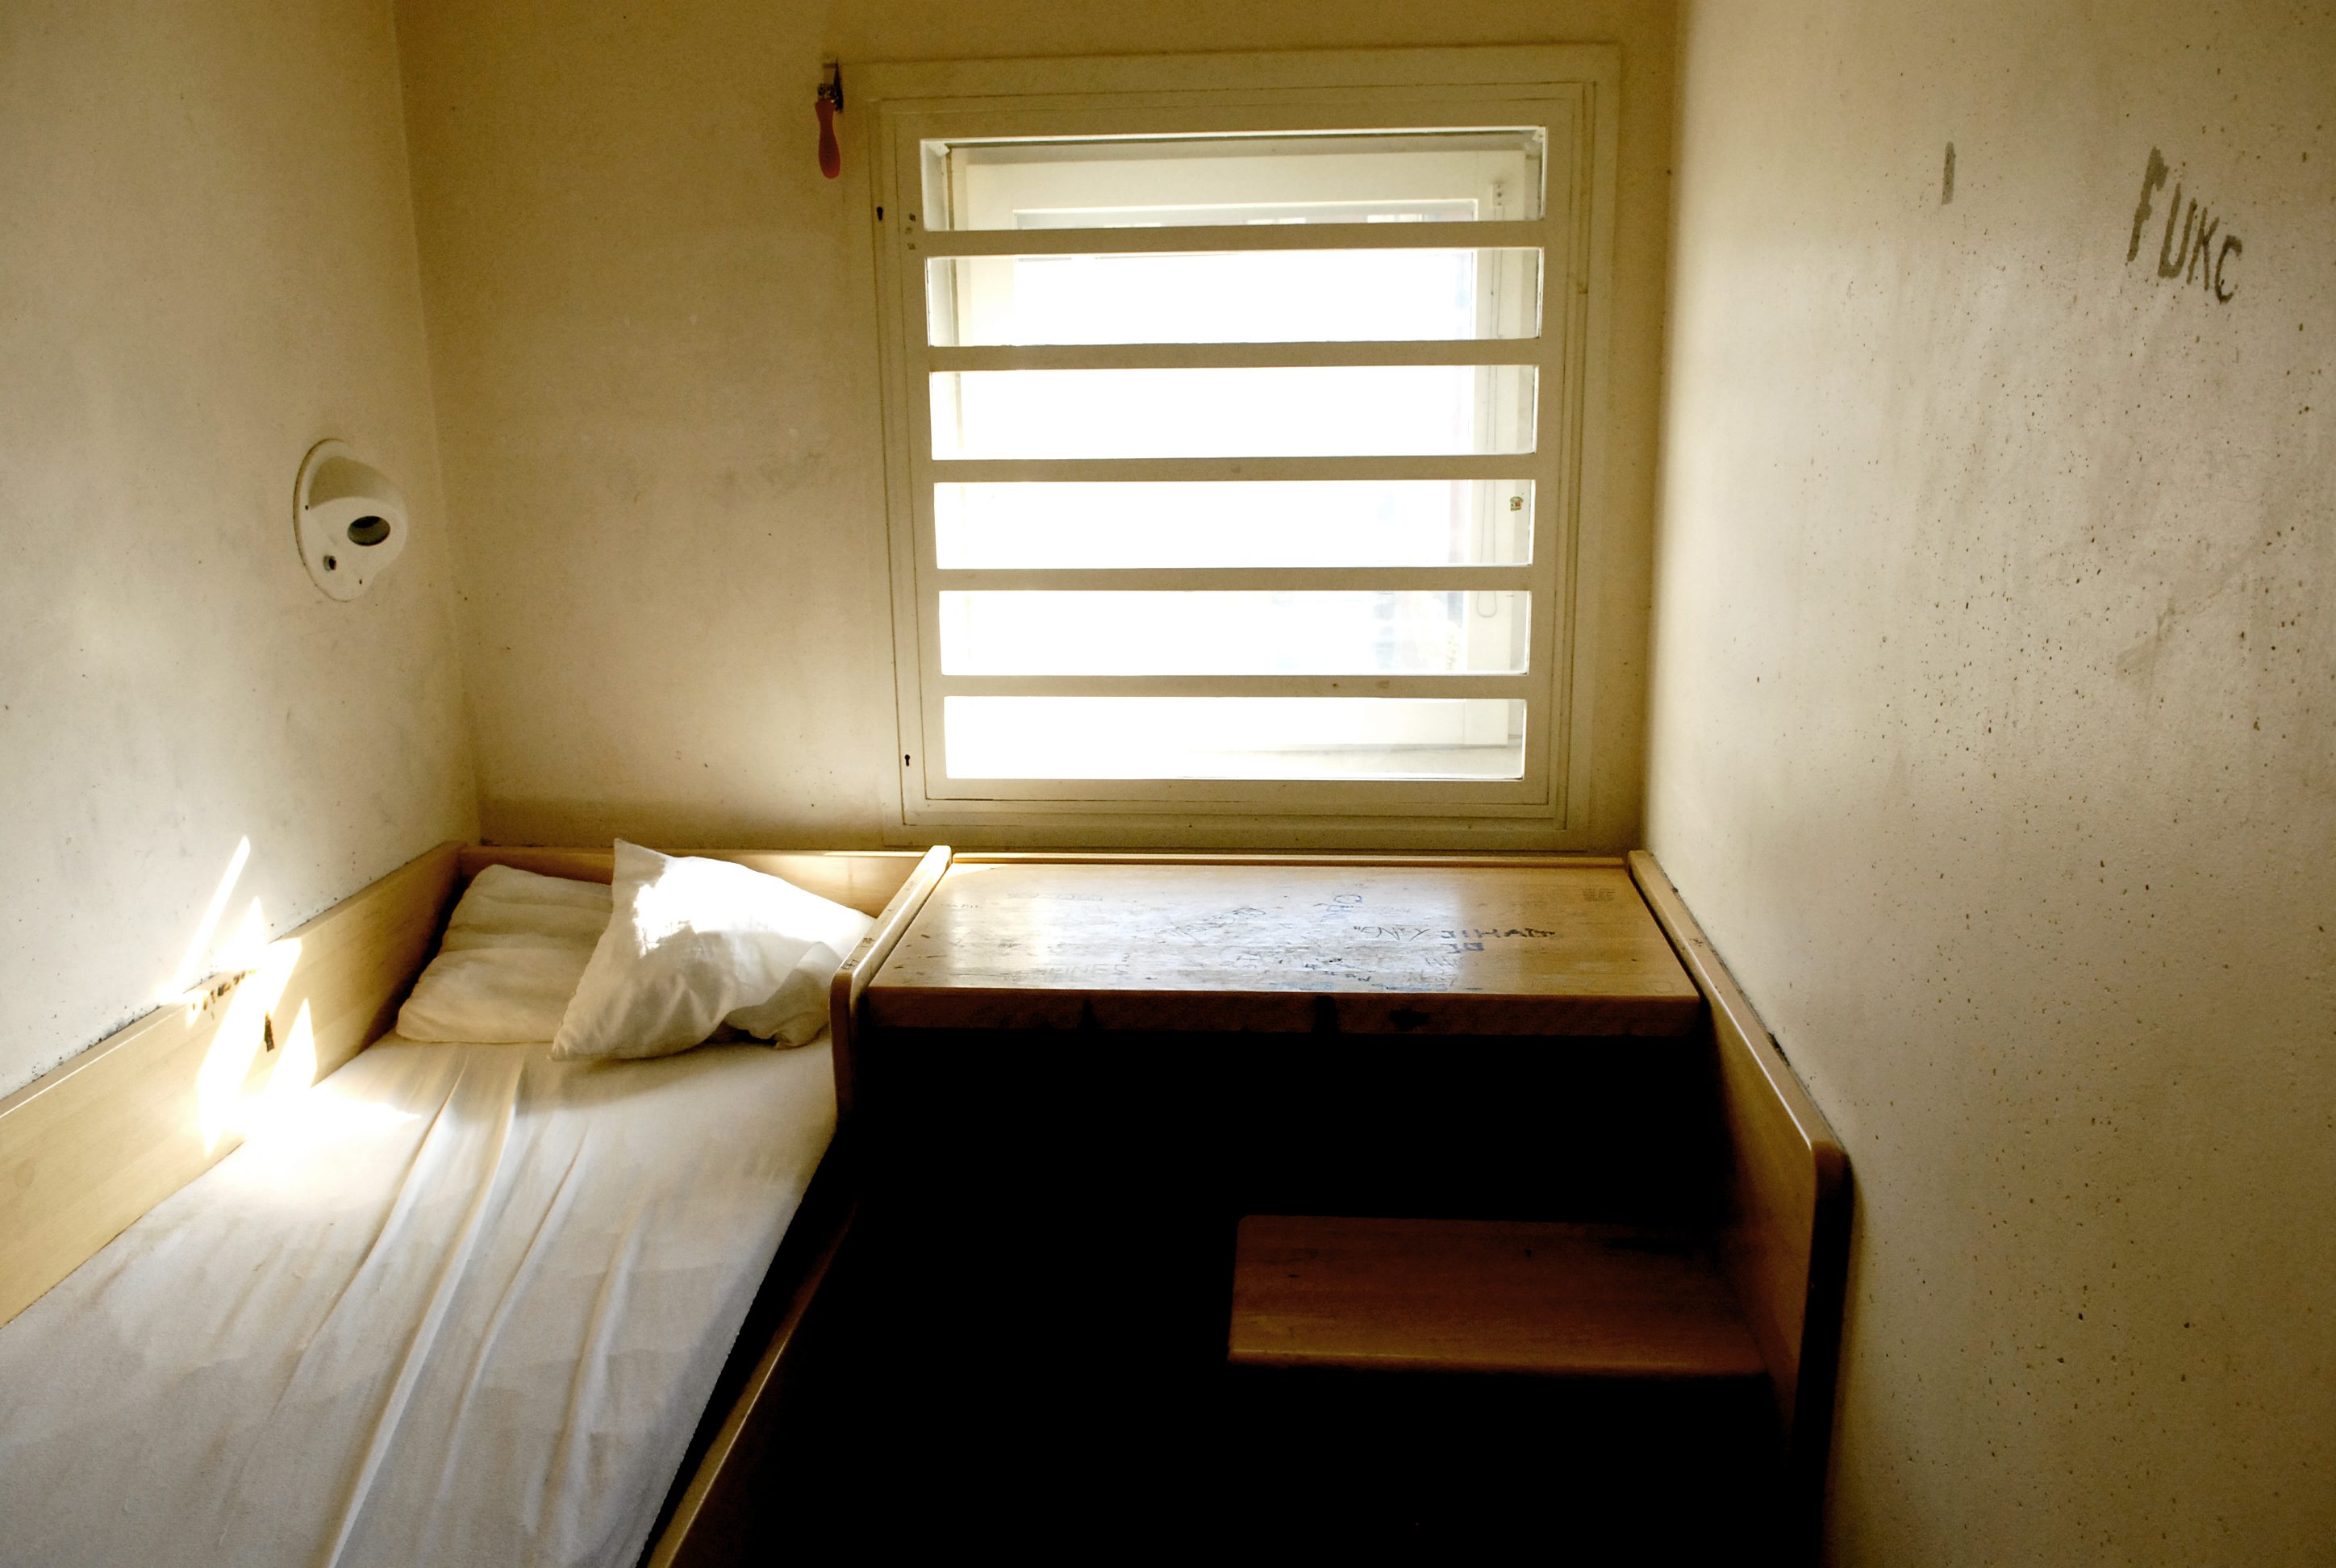 San Diego, Häkte, Cell, USA, Polisen